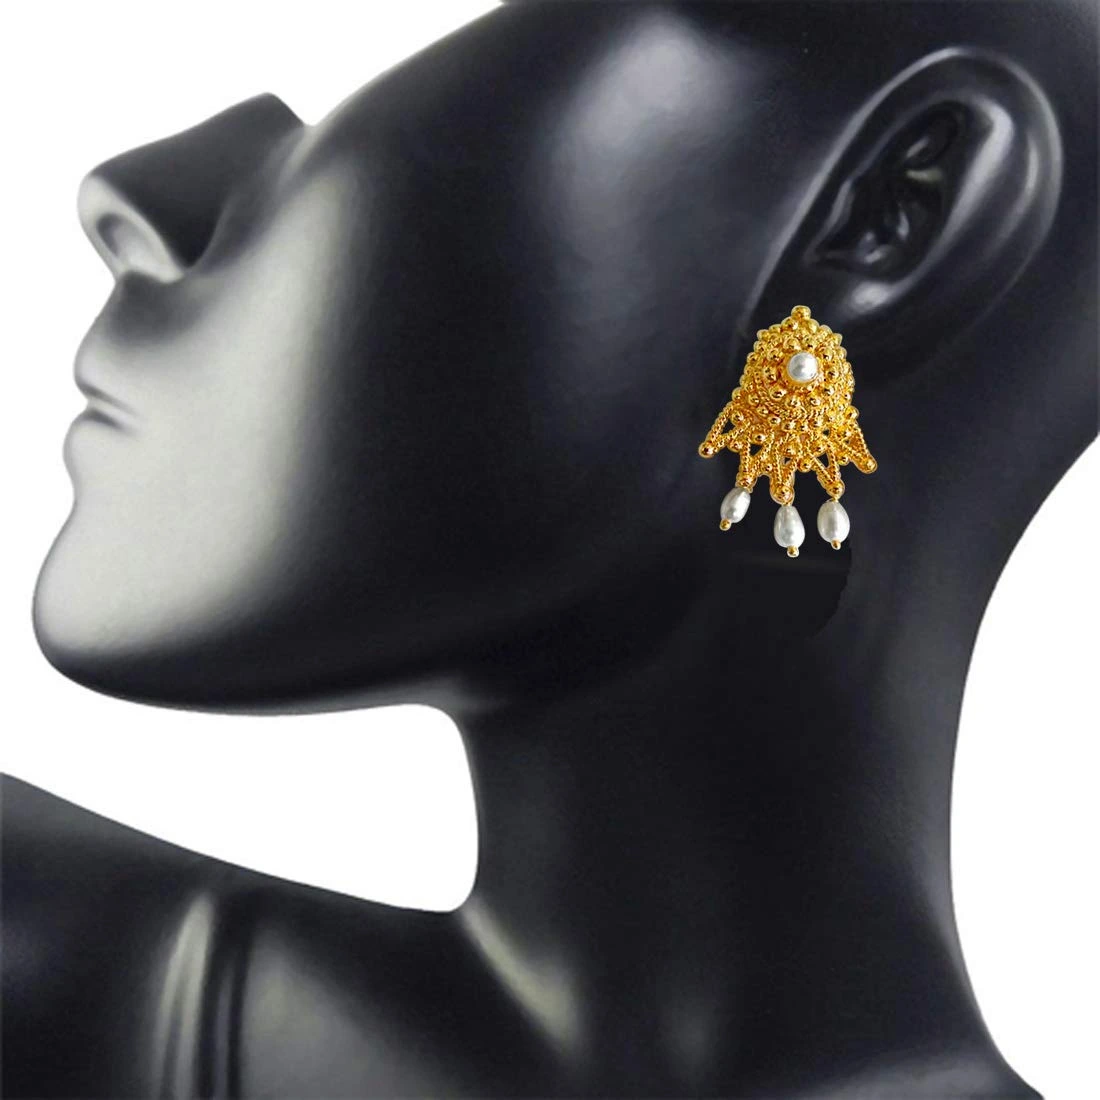 Cute Cupid - Dangling Rice Pearl & Gold Plated Drop Shaped Earrings (SE56)